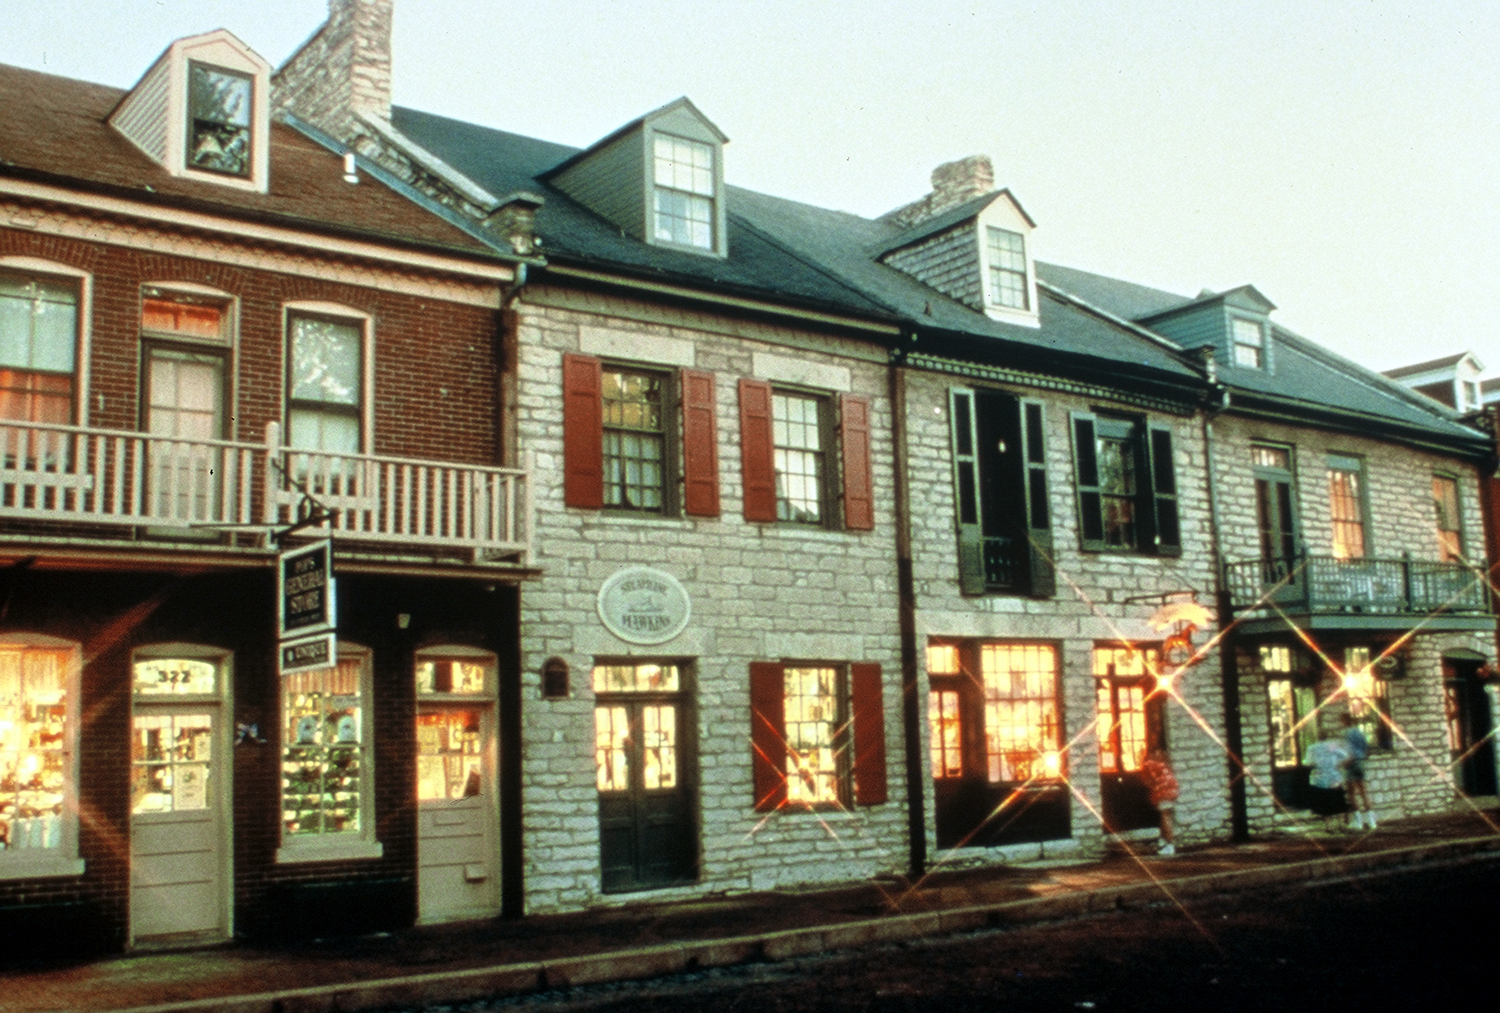 Historic Main Street, St. Charles, Missouri